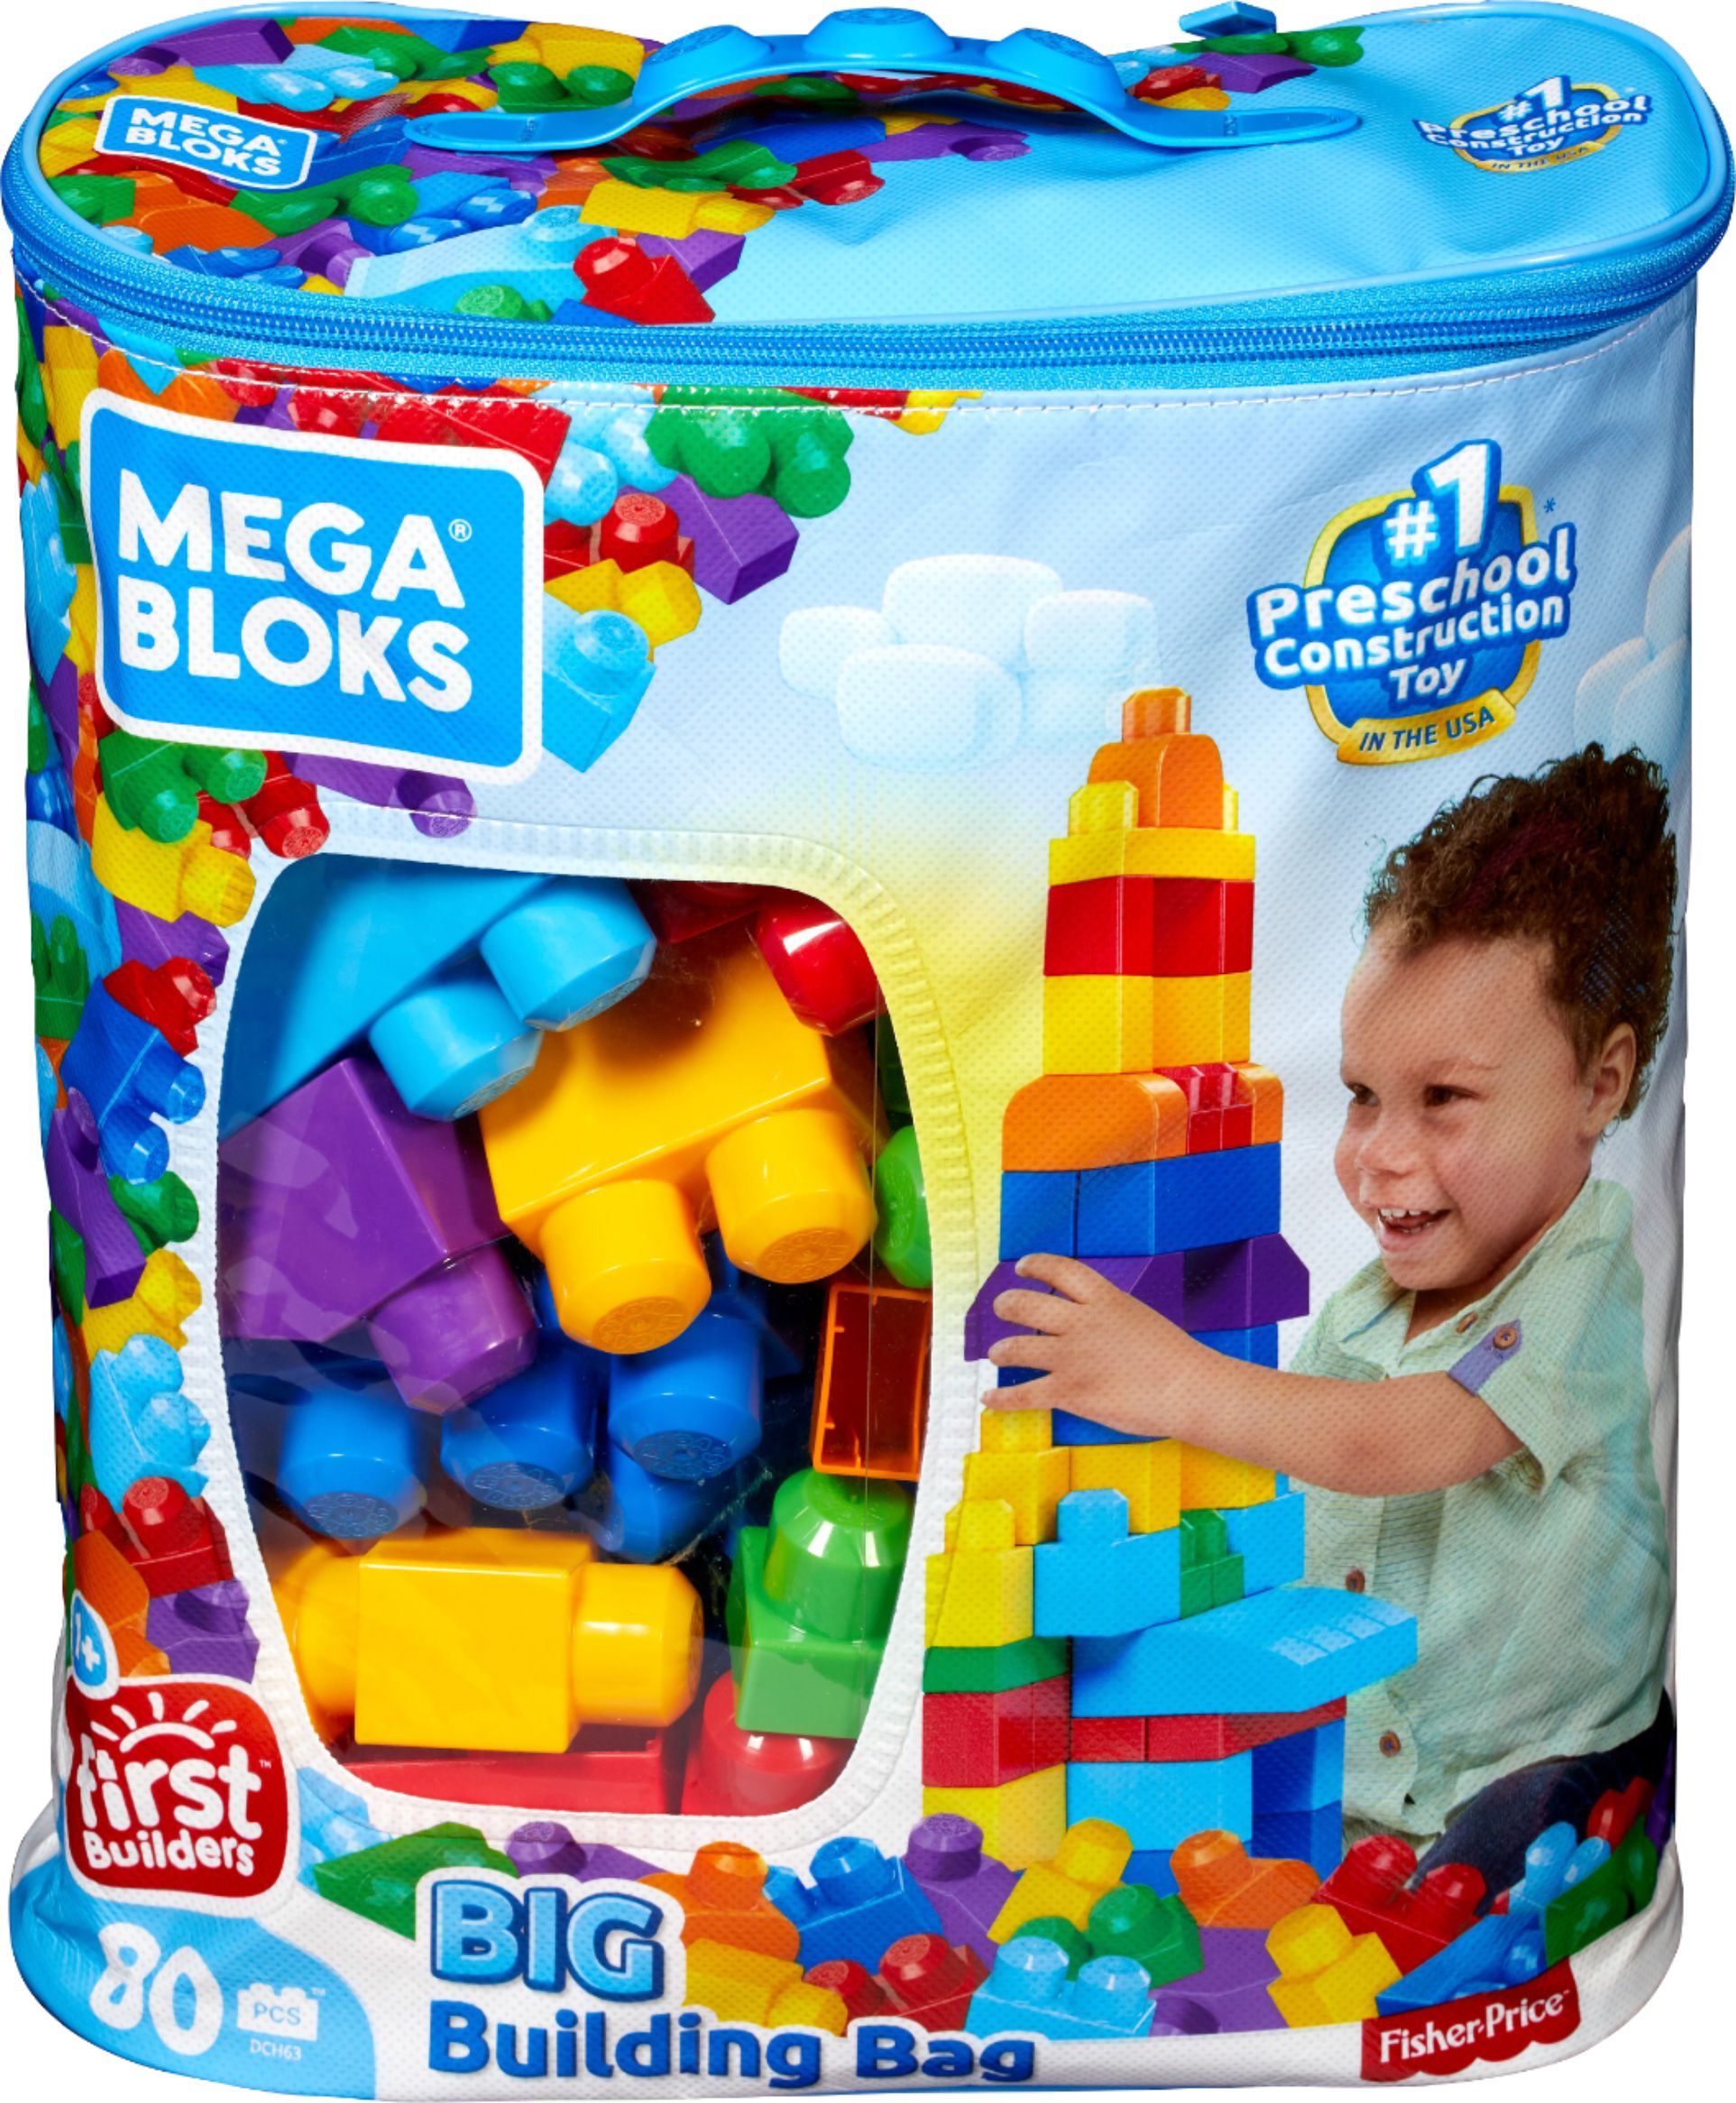 80 Piece for sale online Mega Bloks DCH63 Big Building Bag 